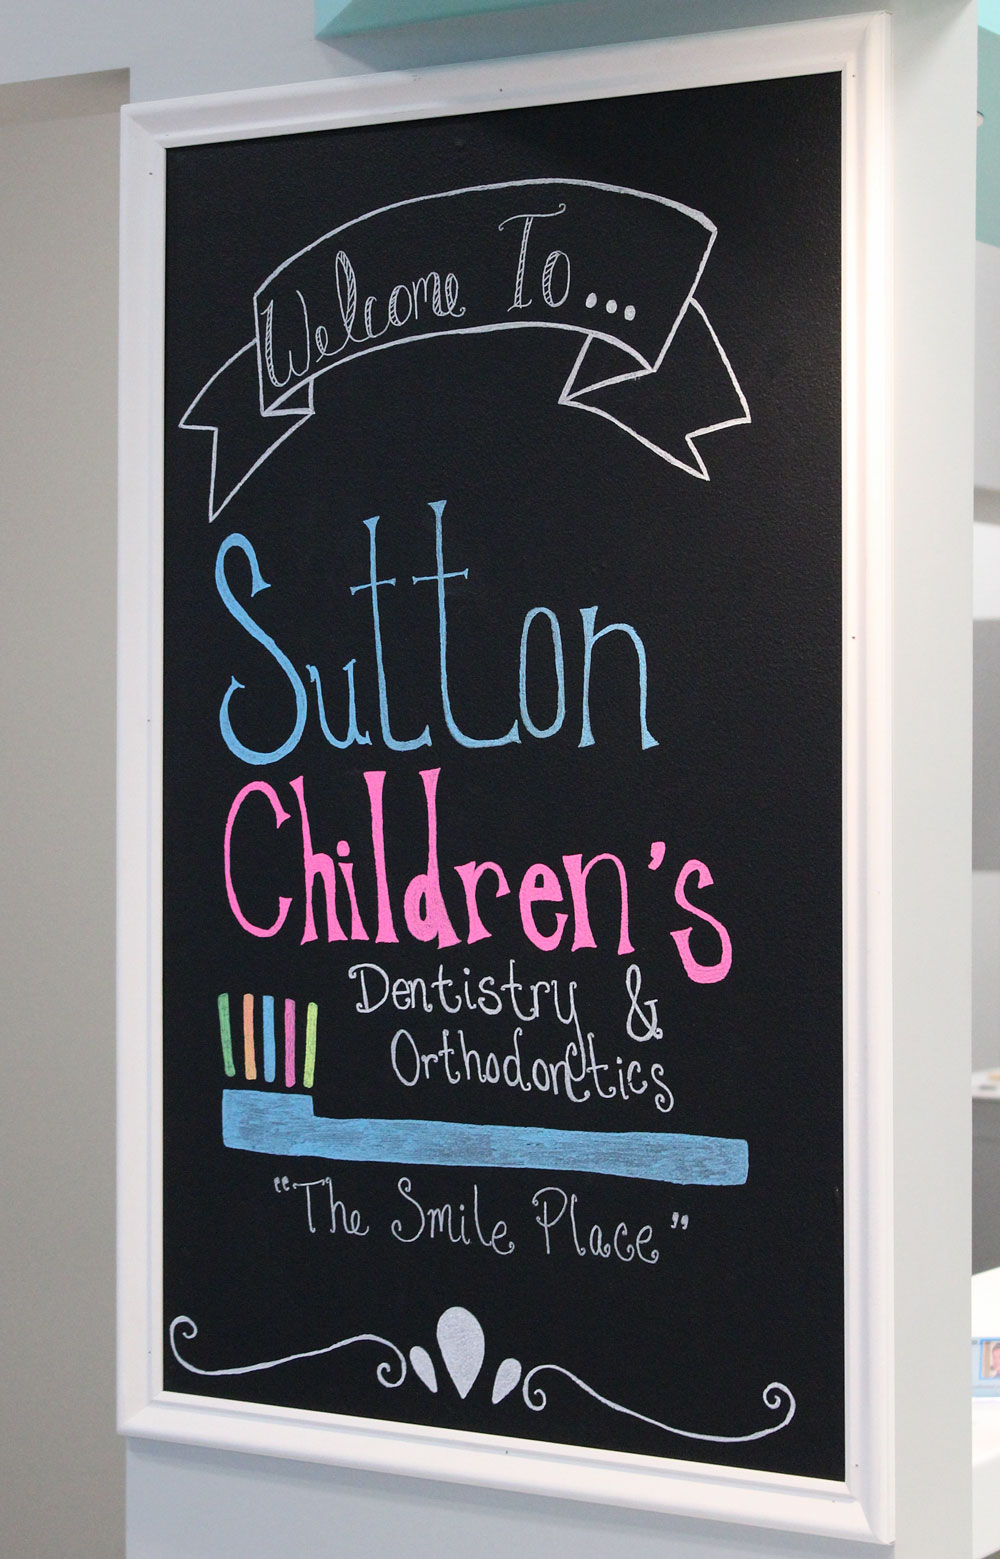 Welcome to Sutton Children's Dentistry